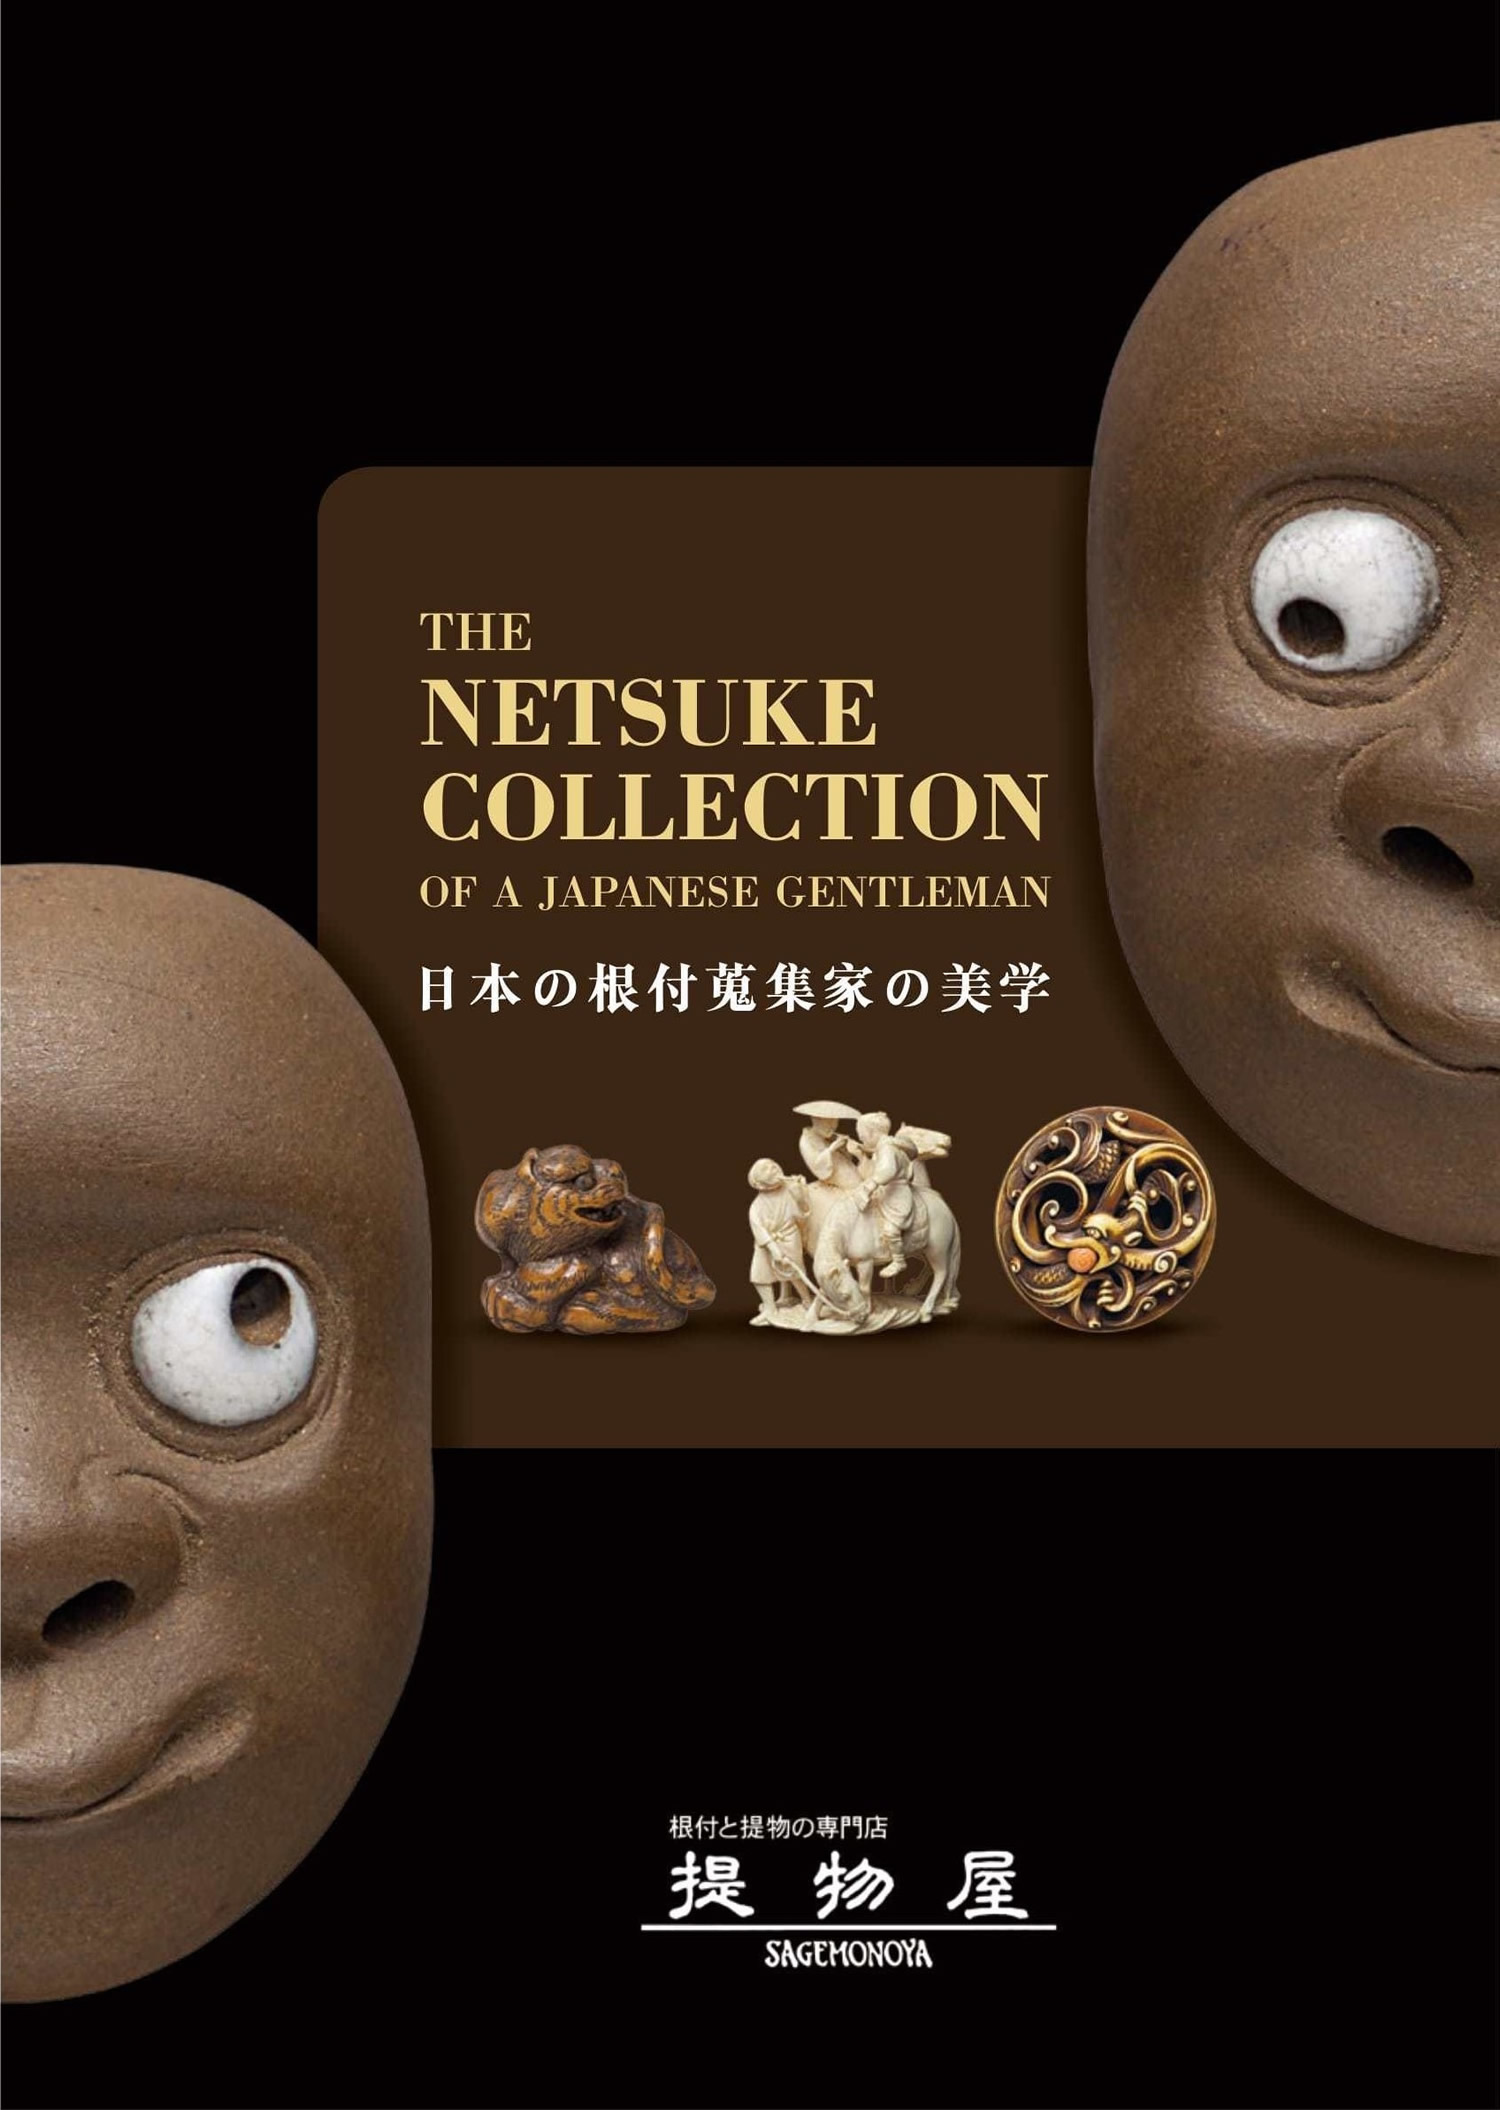 THE NETSUKE COLLECTION OF A JAPANESE GENTLEMANの商品画像